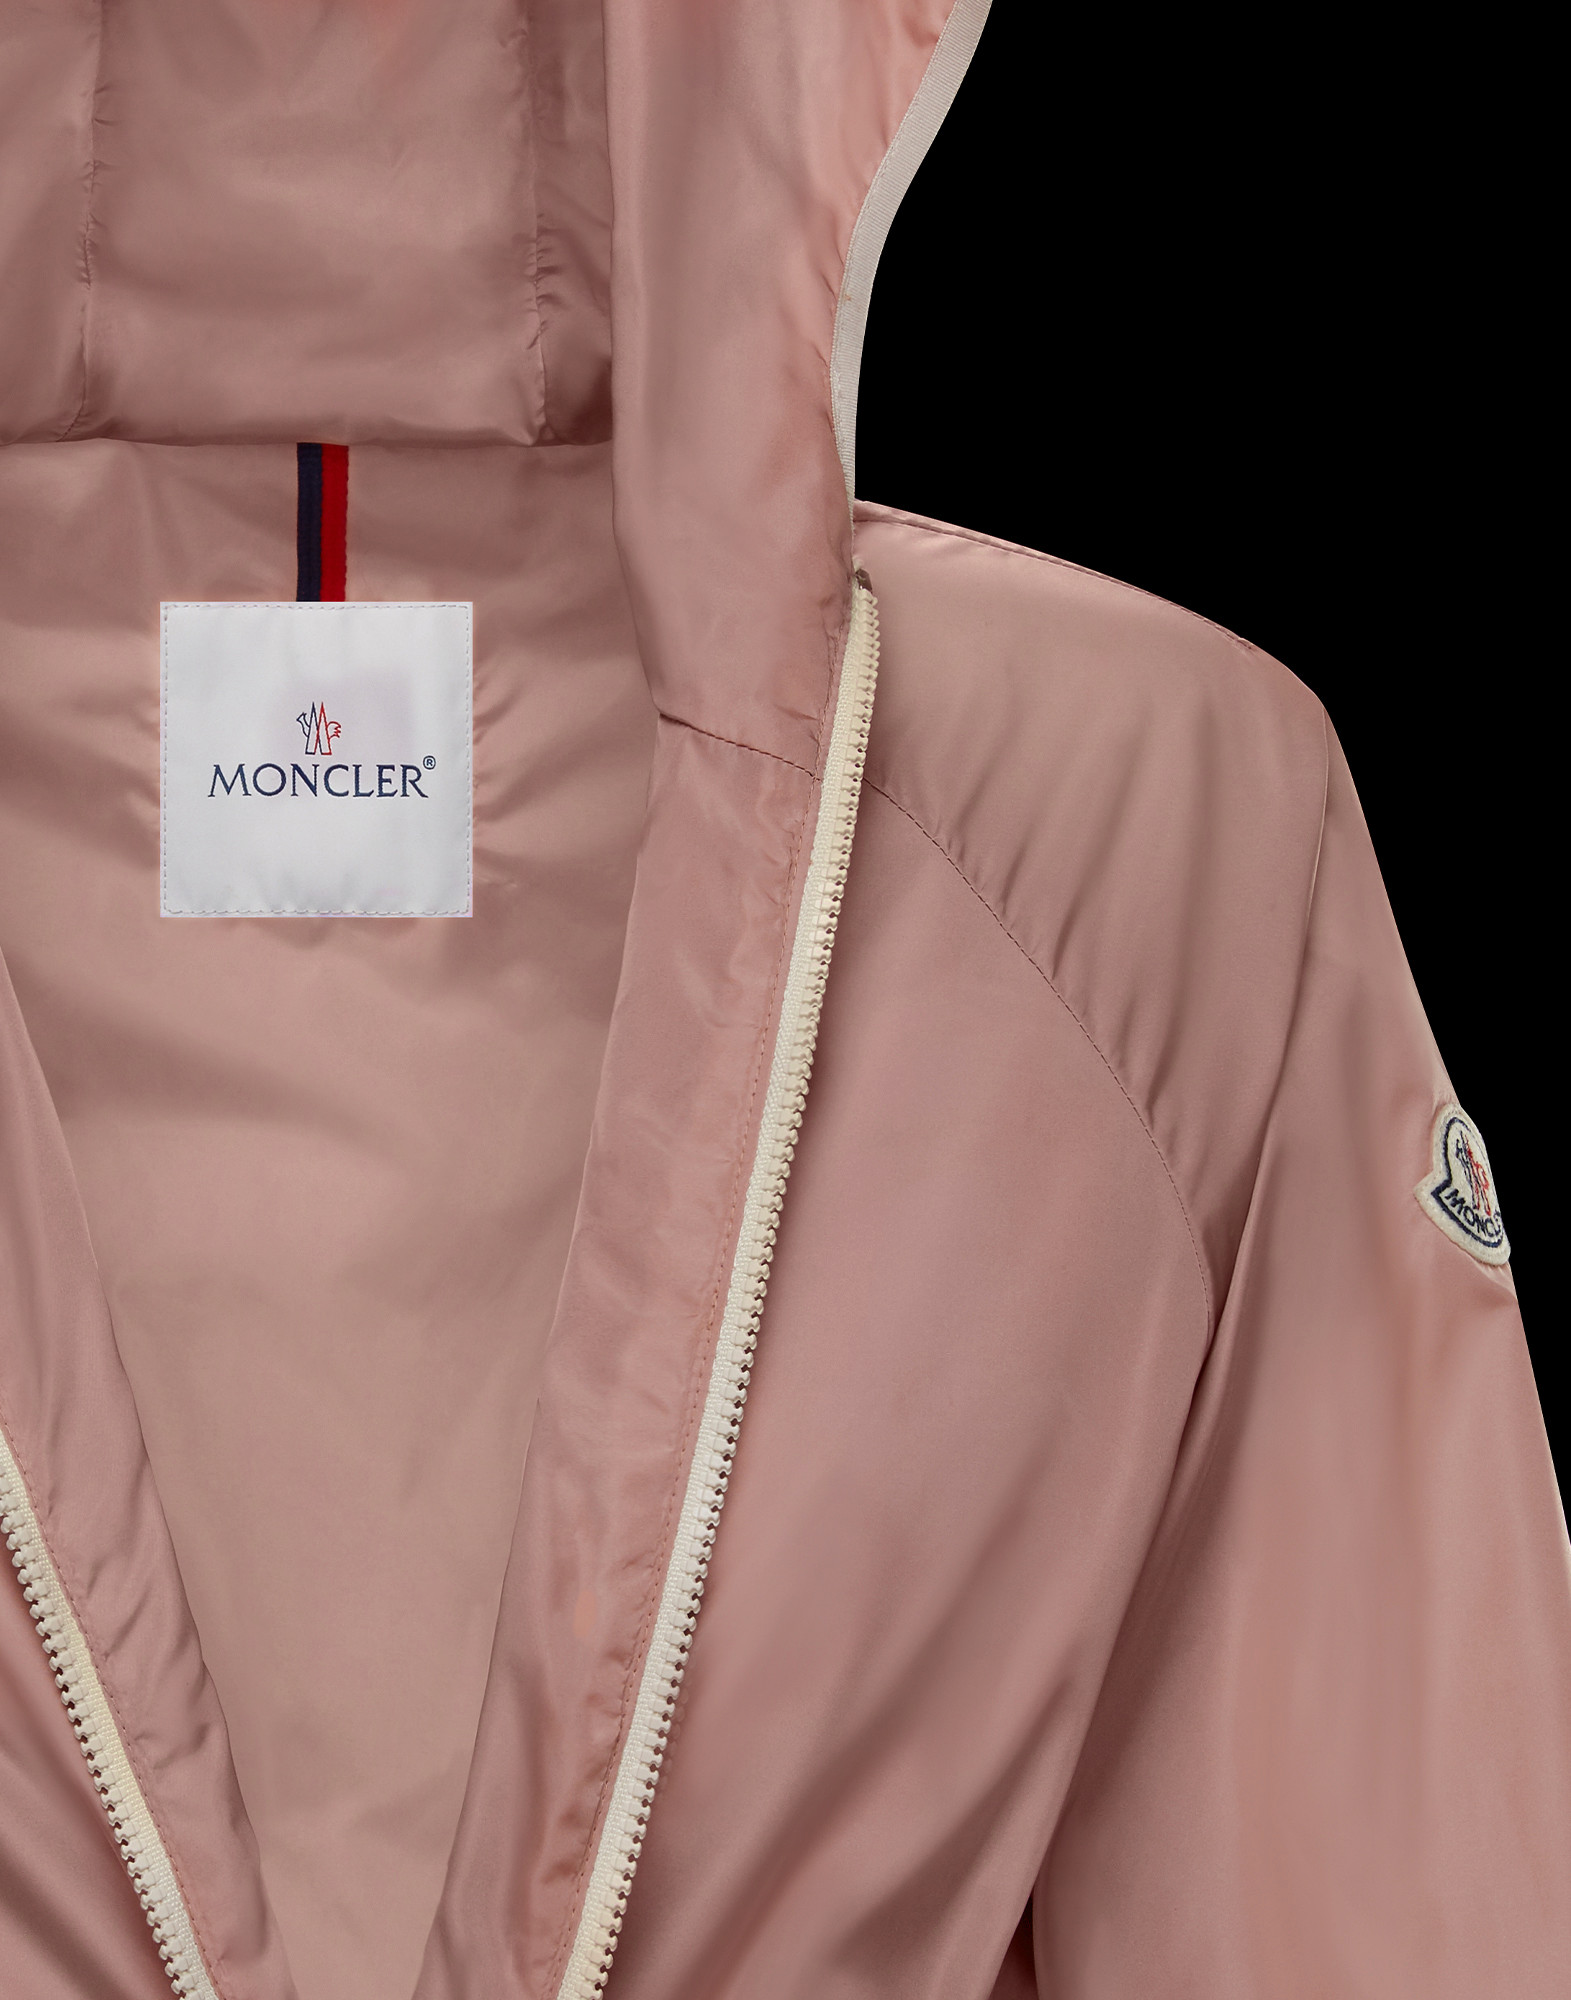 moncler rose jacket